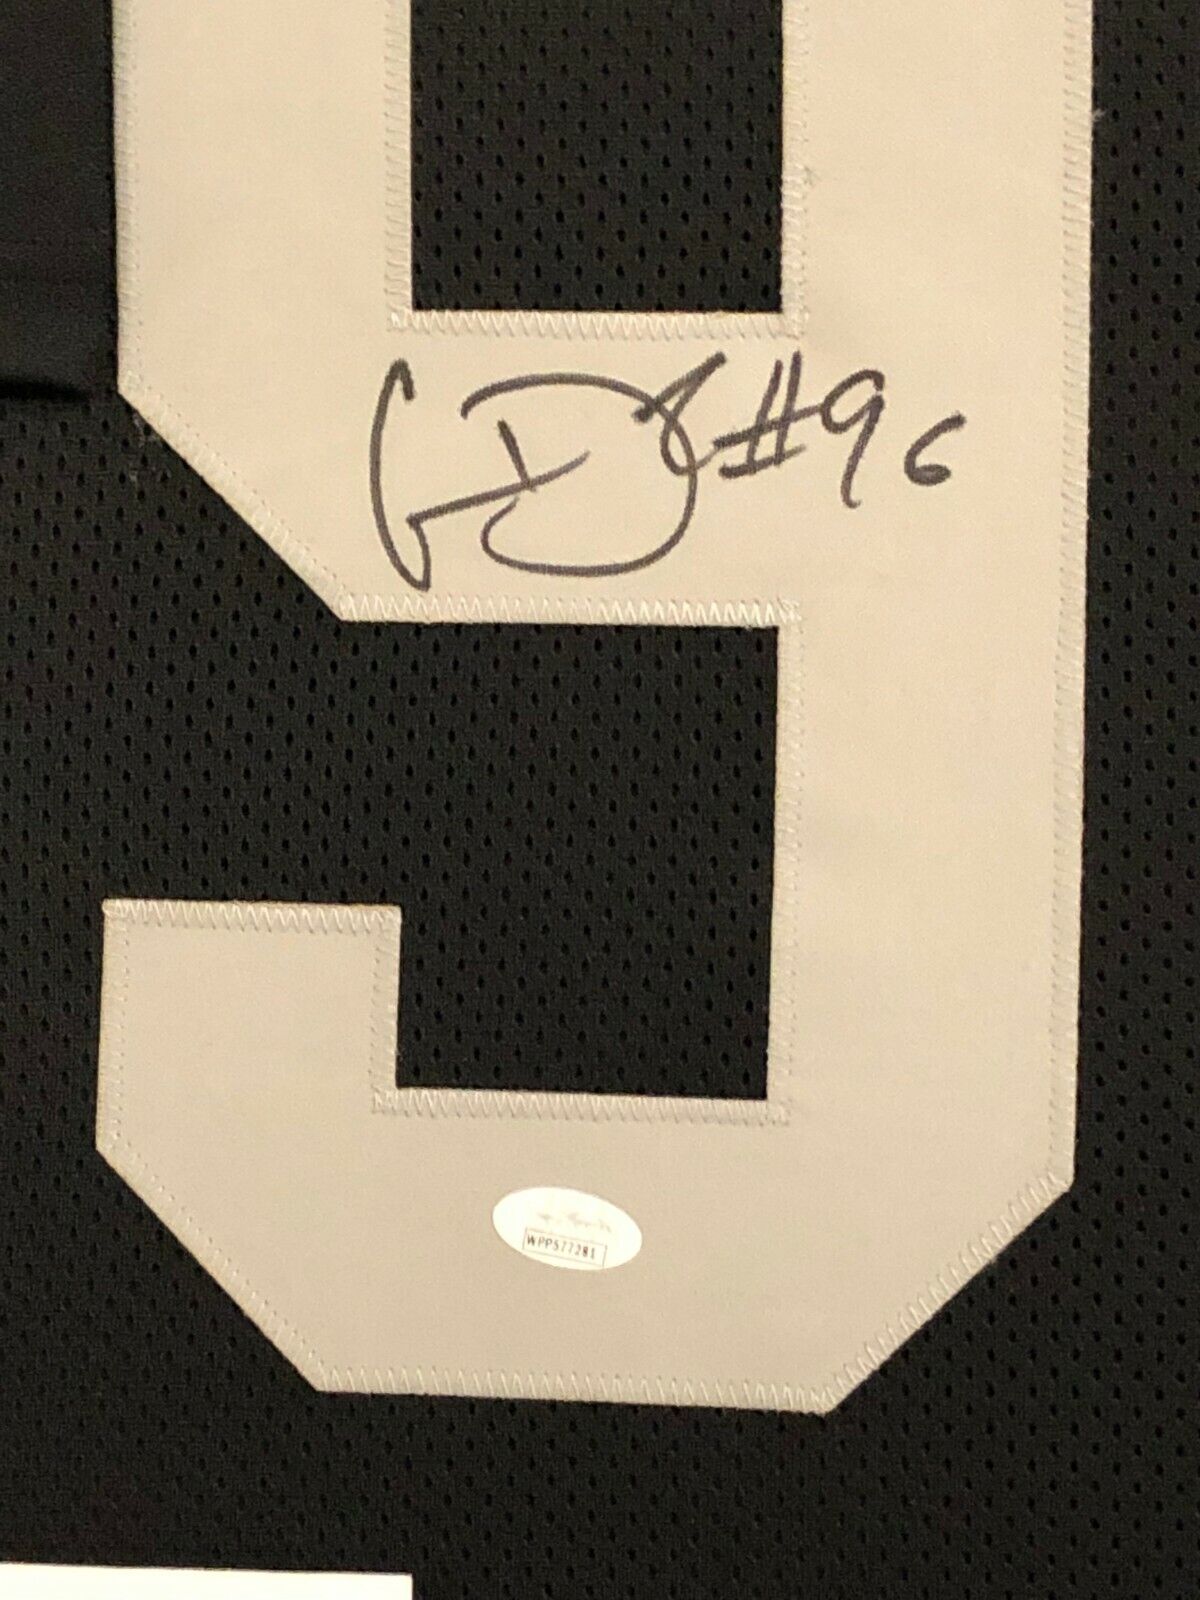 MVP Authentics Framed Oakland Raiders Clelin Ferrell Autographed Signed Jersey Jsa Coa 269.10 sports jersey framing , jersey framing